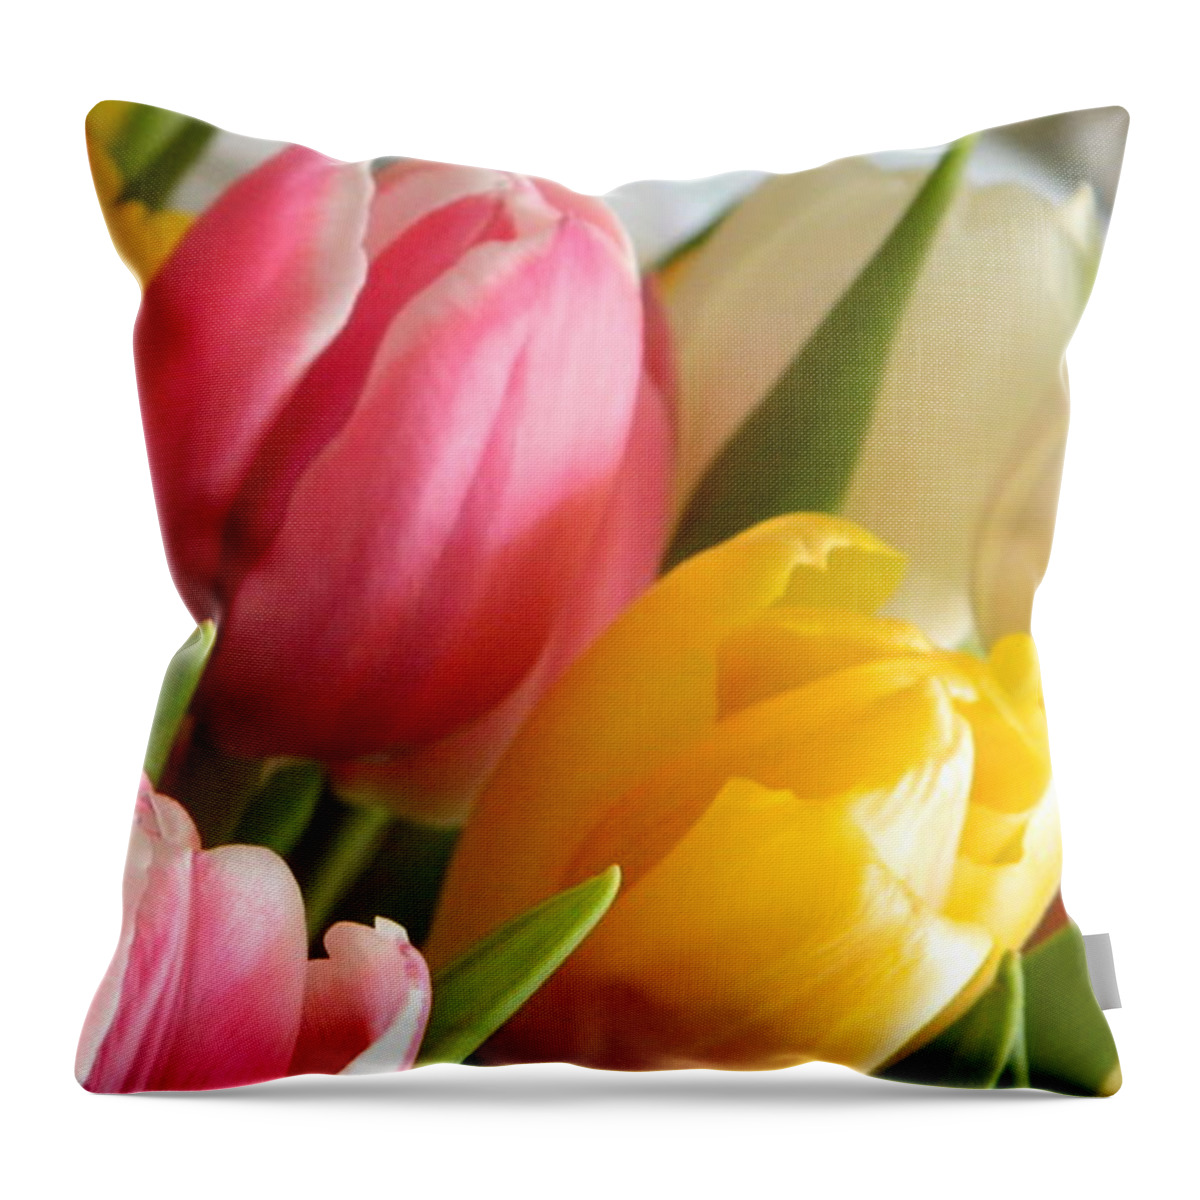 Tulip Throw Pillow featuring the photograph Buttercup Pinks by Karen Mesaros